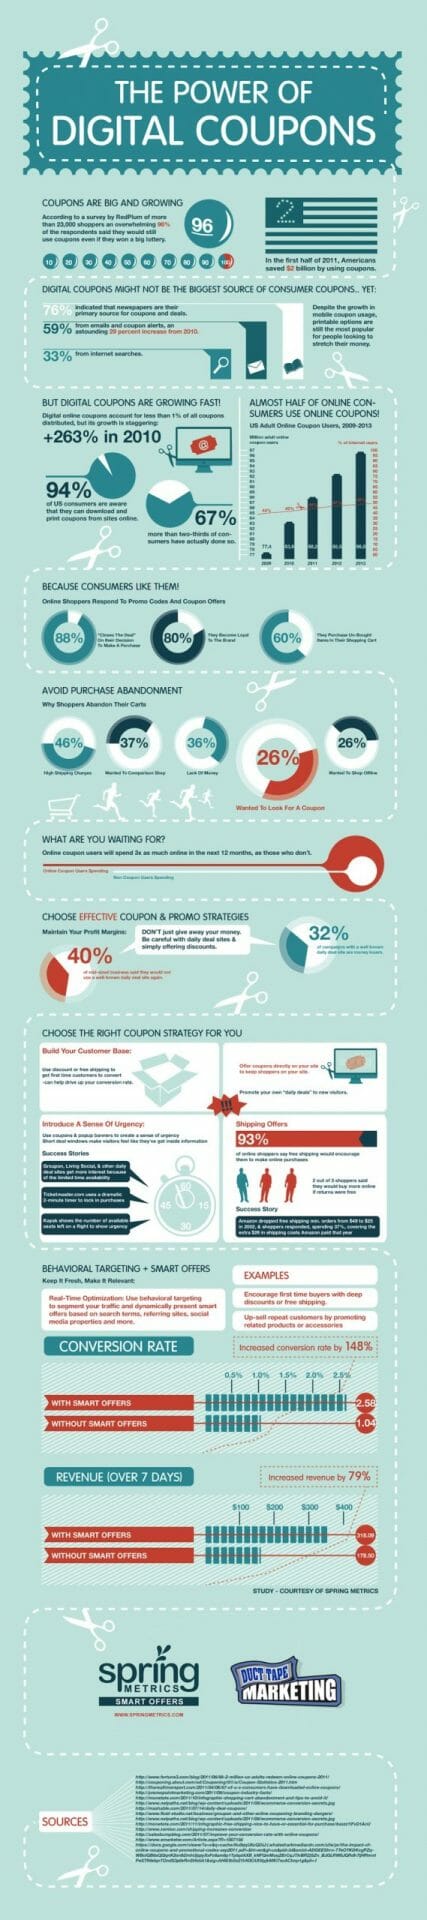 Digital Coupon Infographic